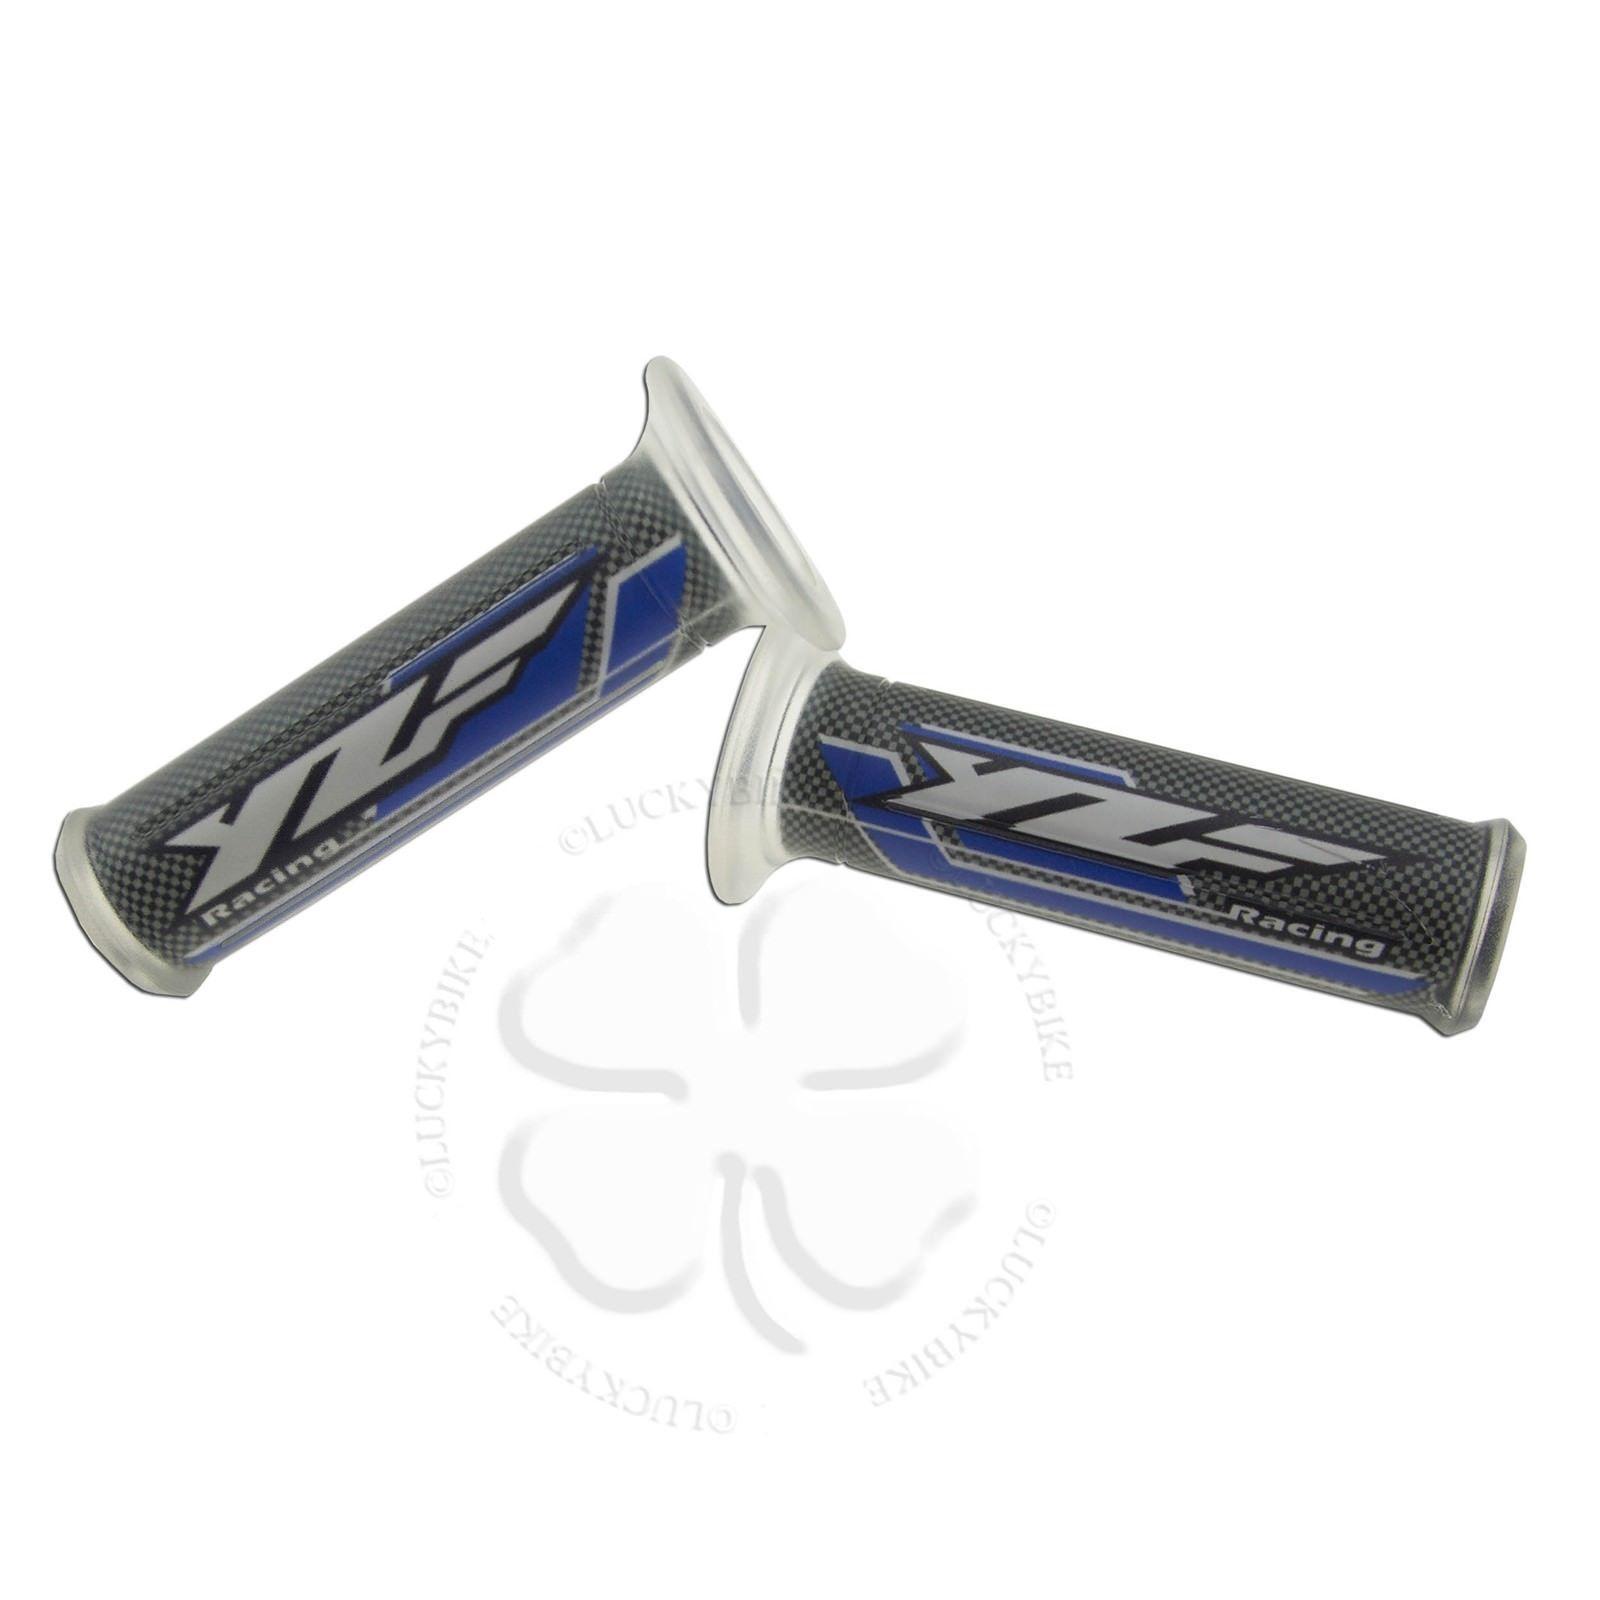 YZF Logo - Blue YZF Logo Hand Grips Yamaha R1 R6 R6s 600 1000 600R 1990 2014